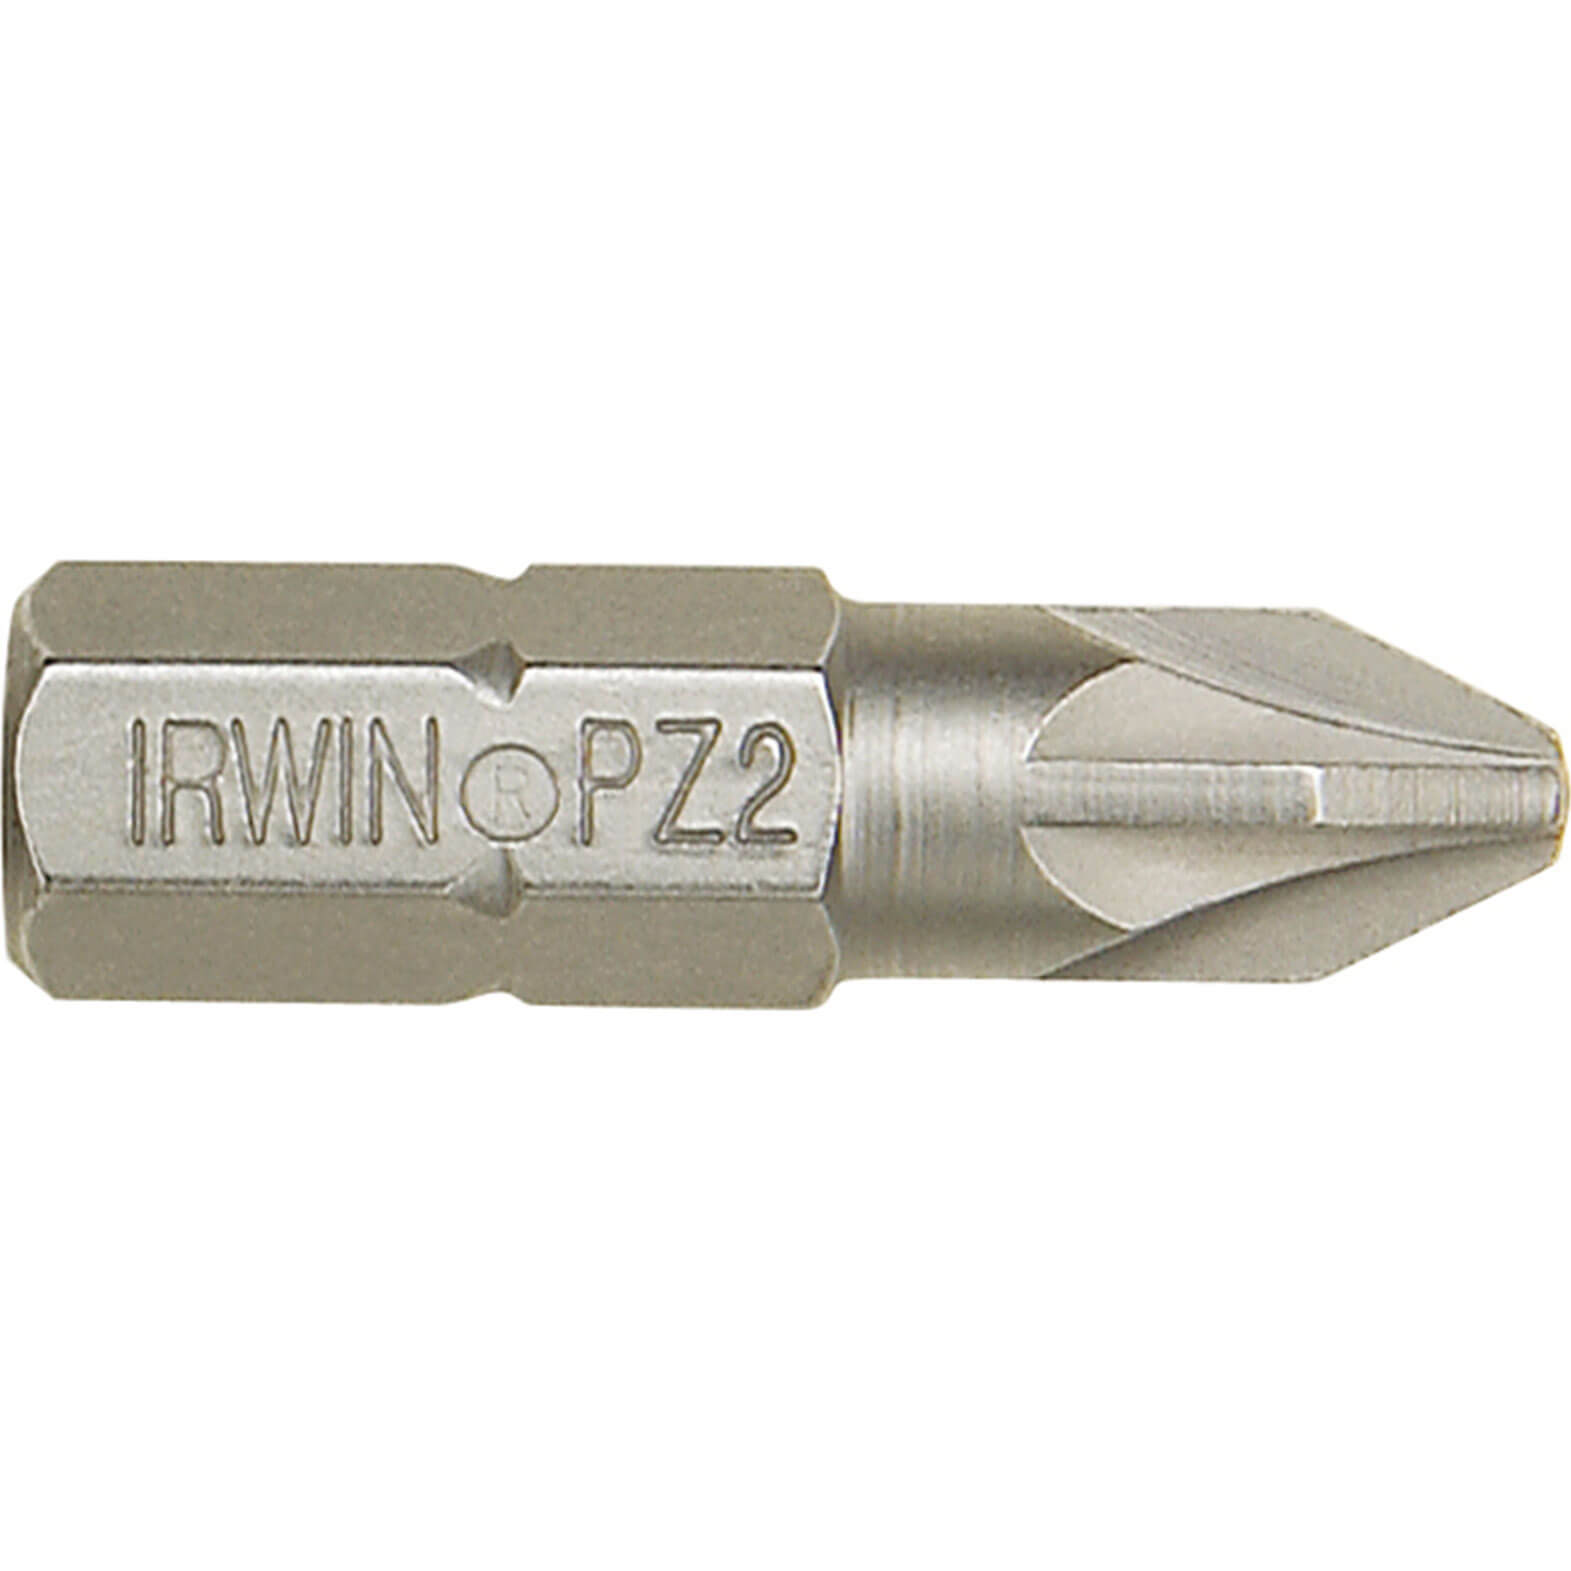 Photo of Irwin Pozi Screwdriver Bit Pz2 25mm Pack Of 2